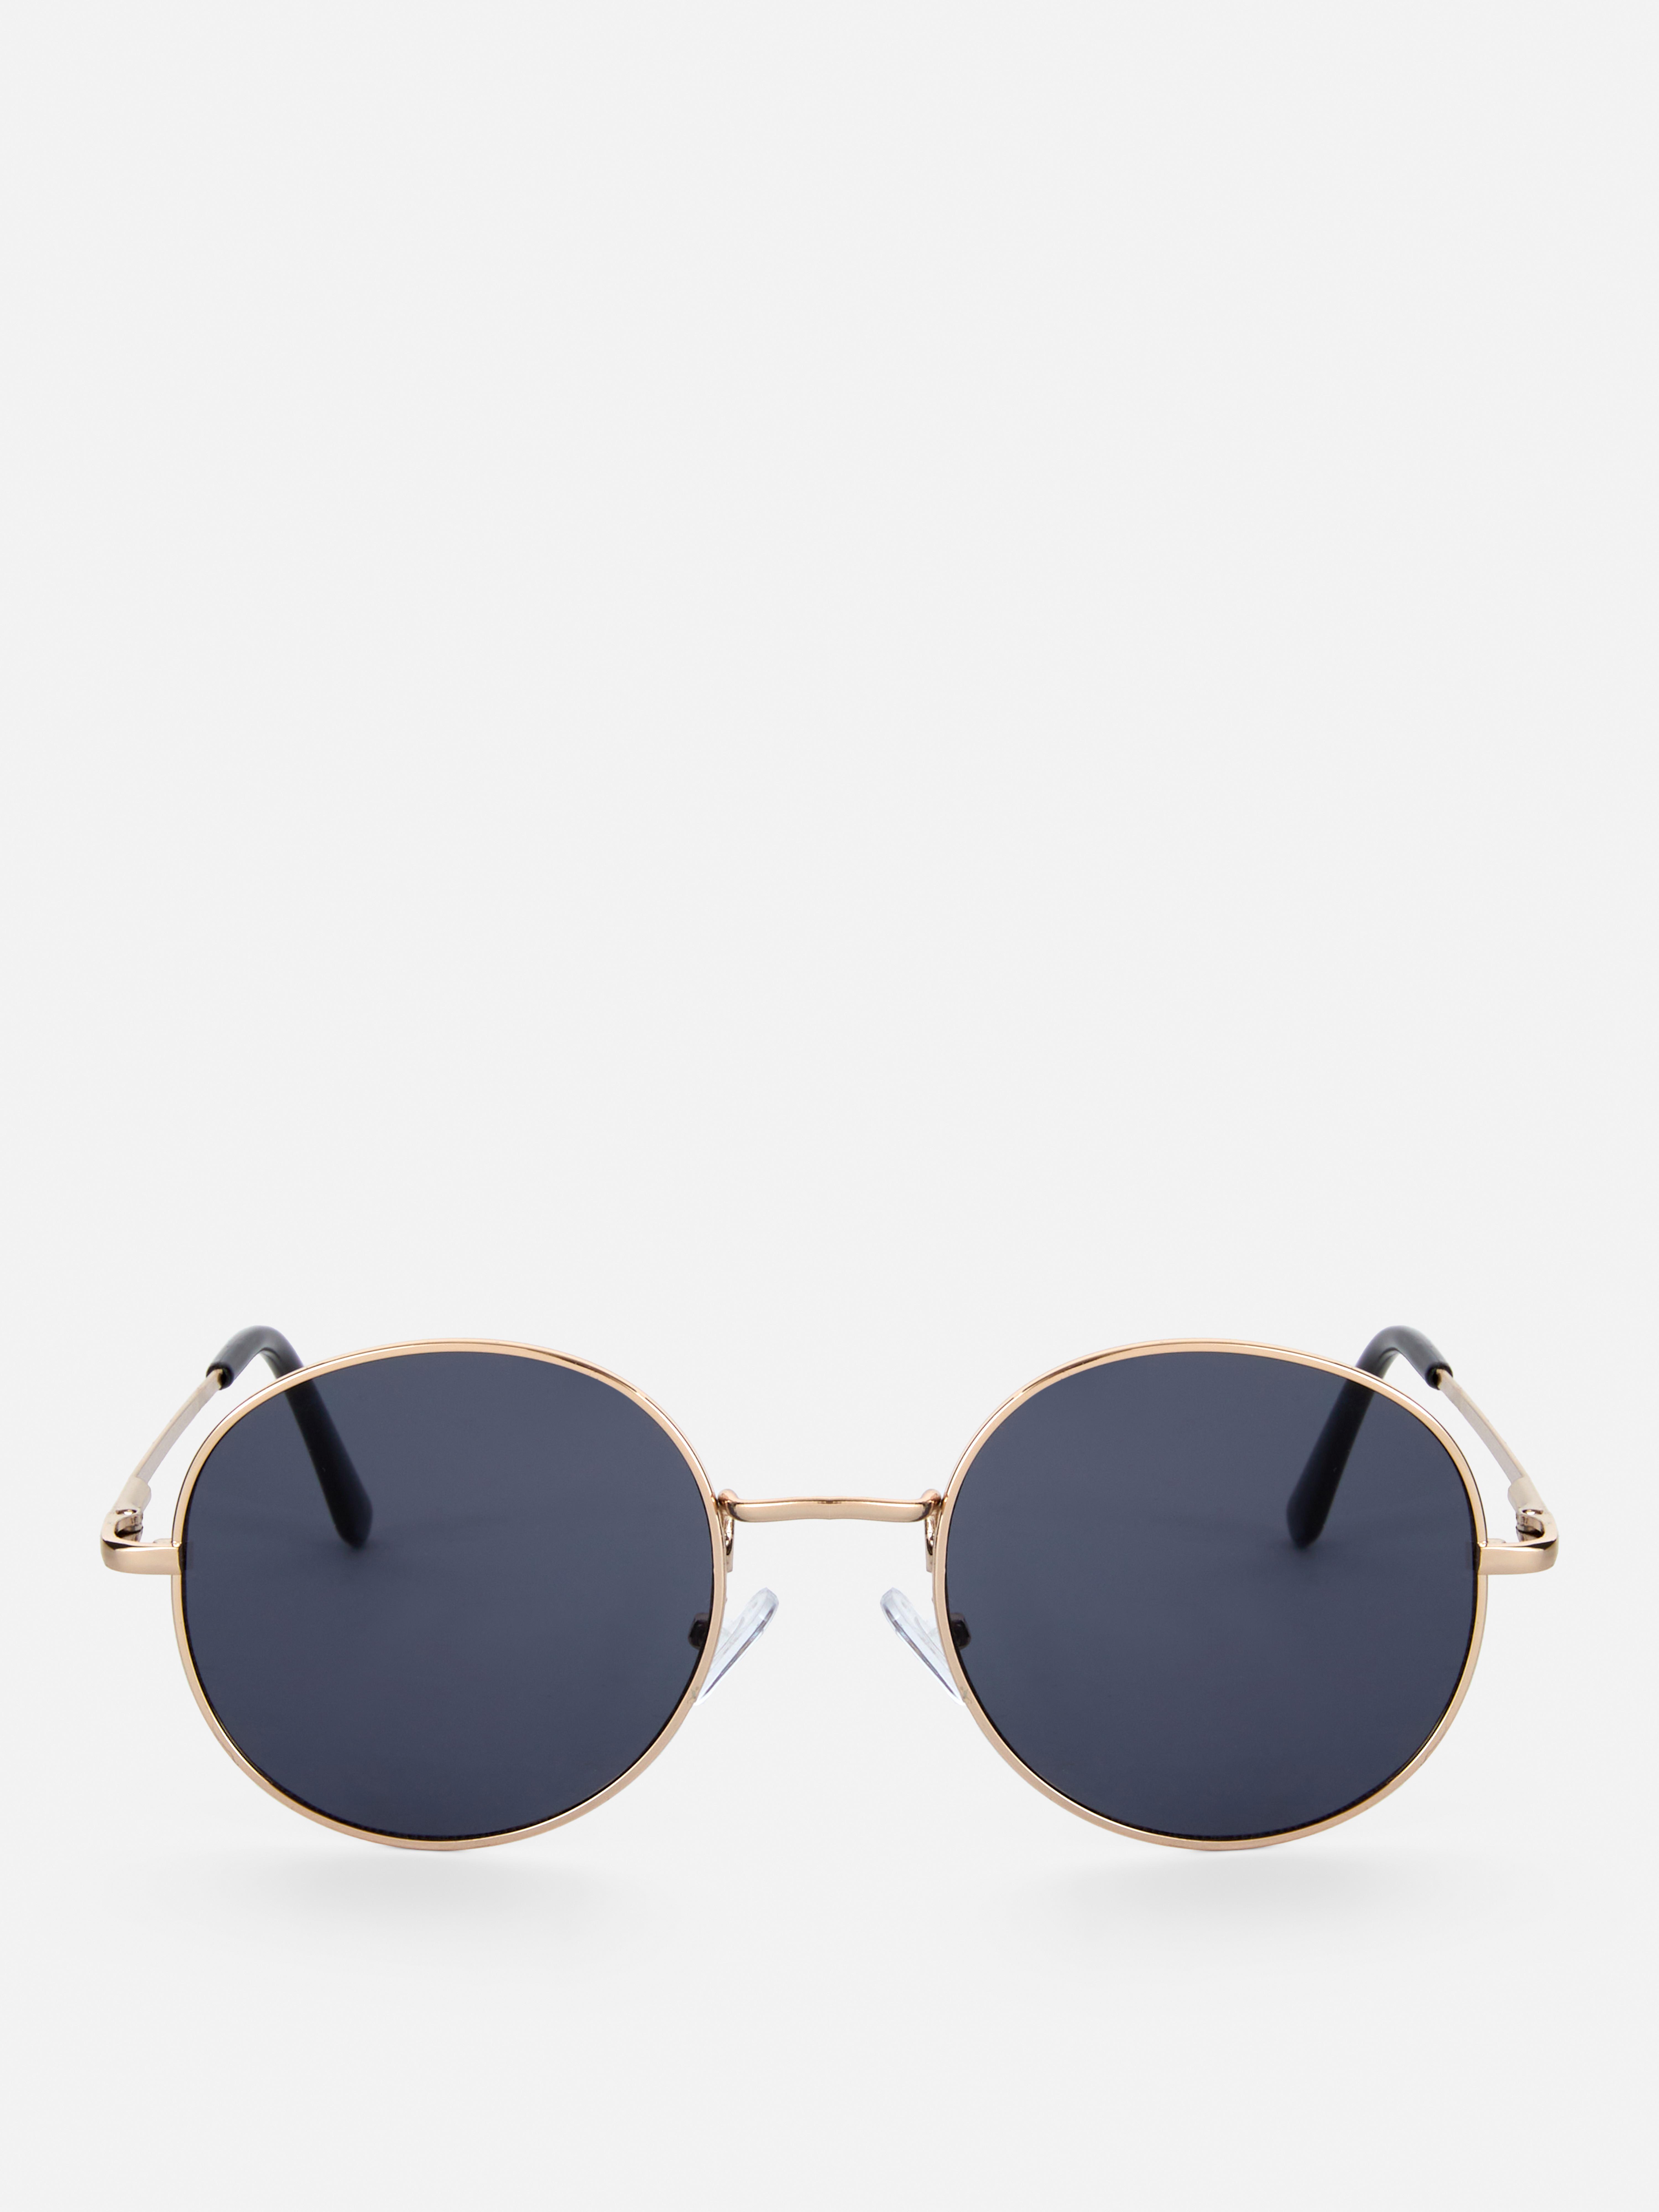 Metal Frame Round Vintage Sunglasses